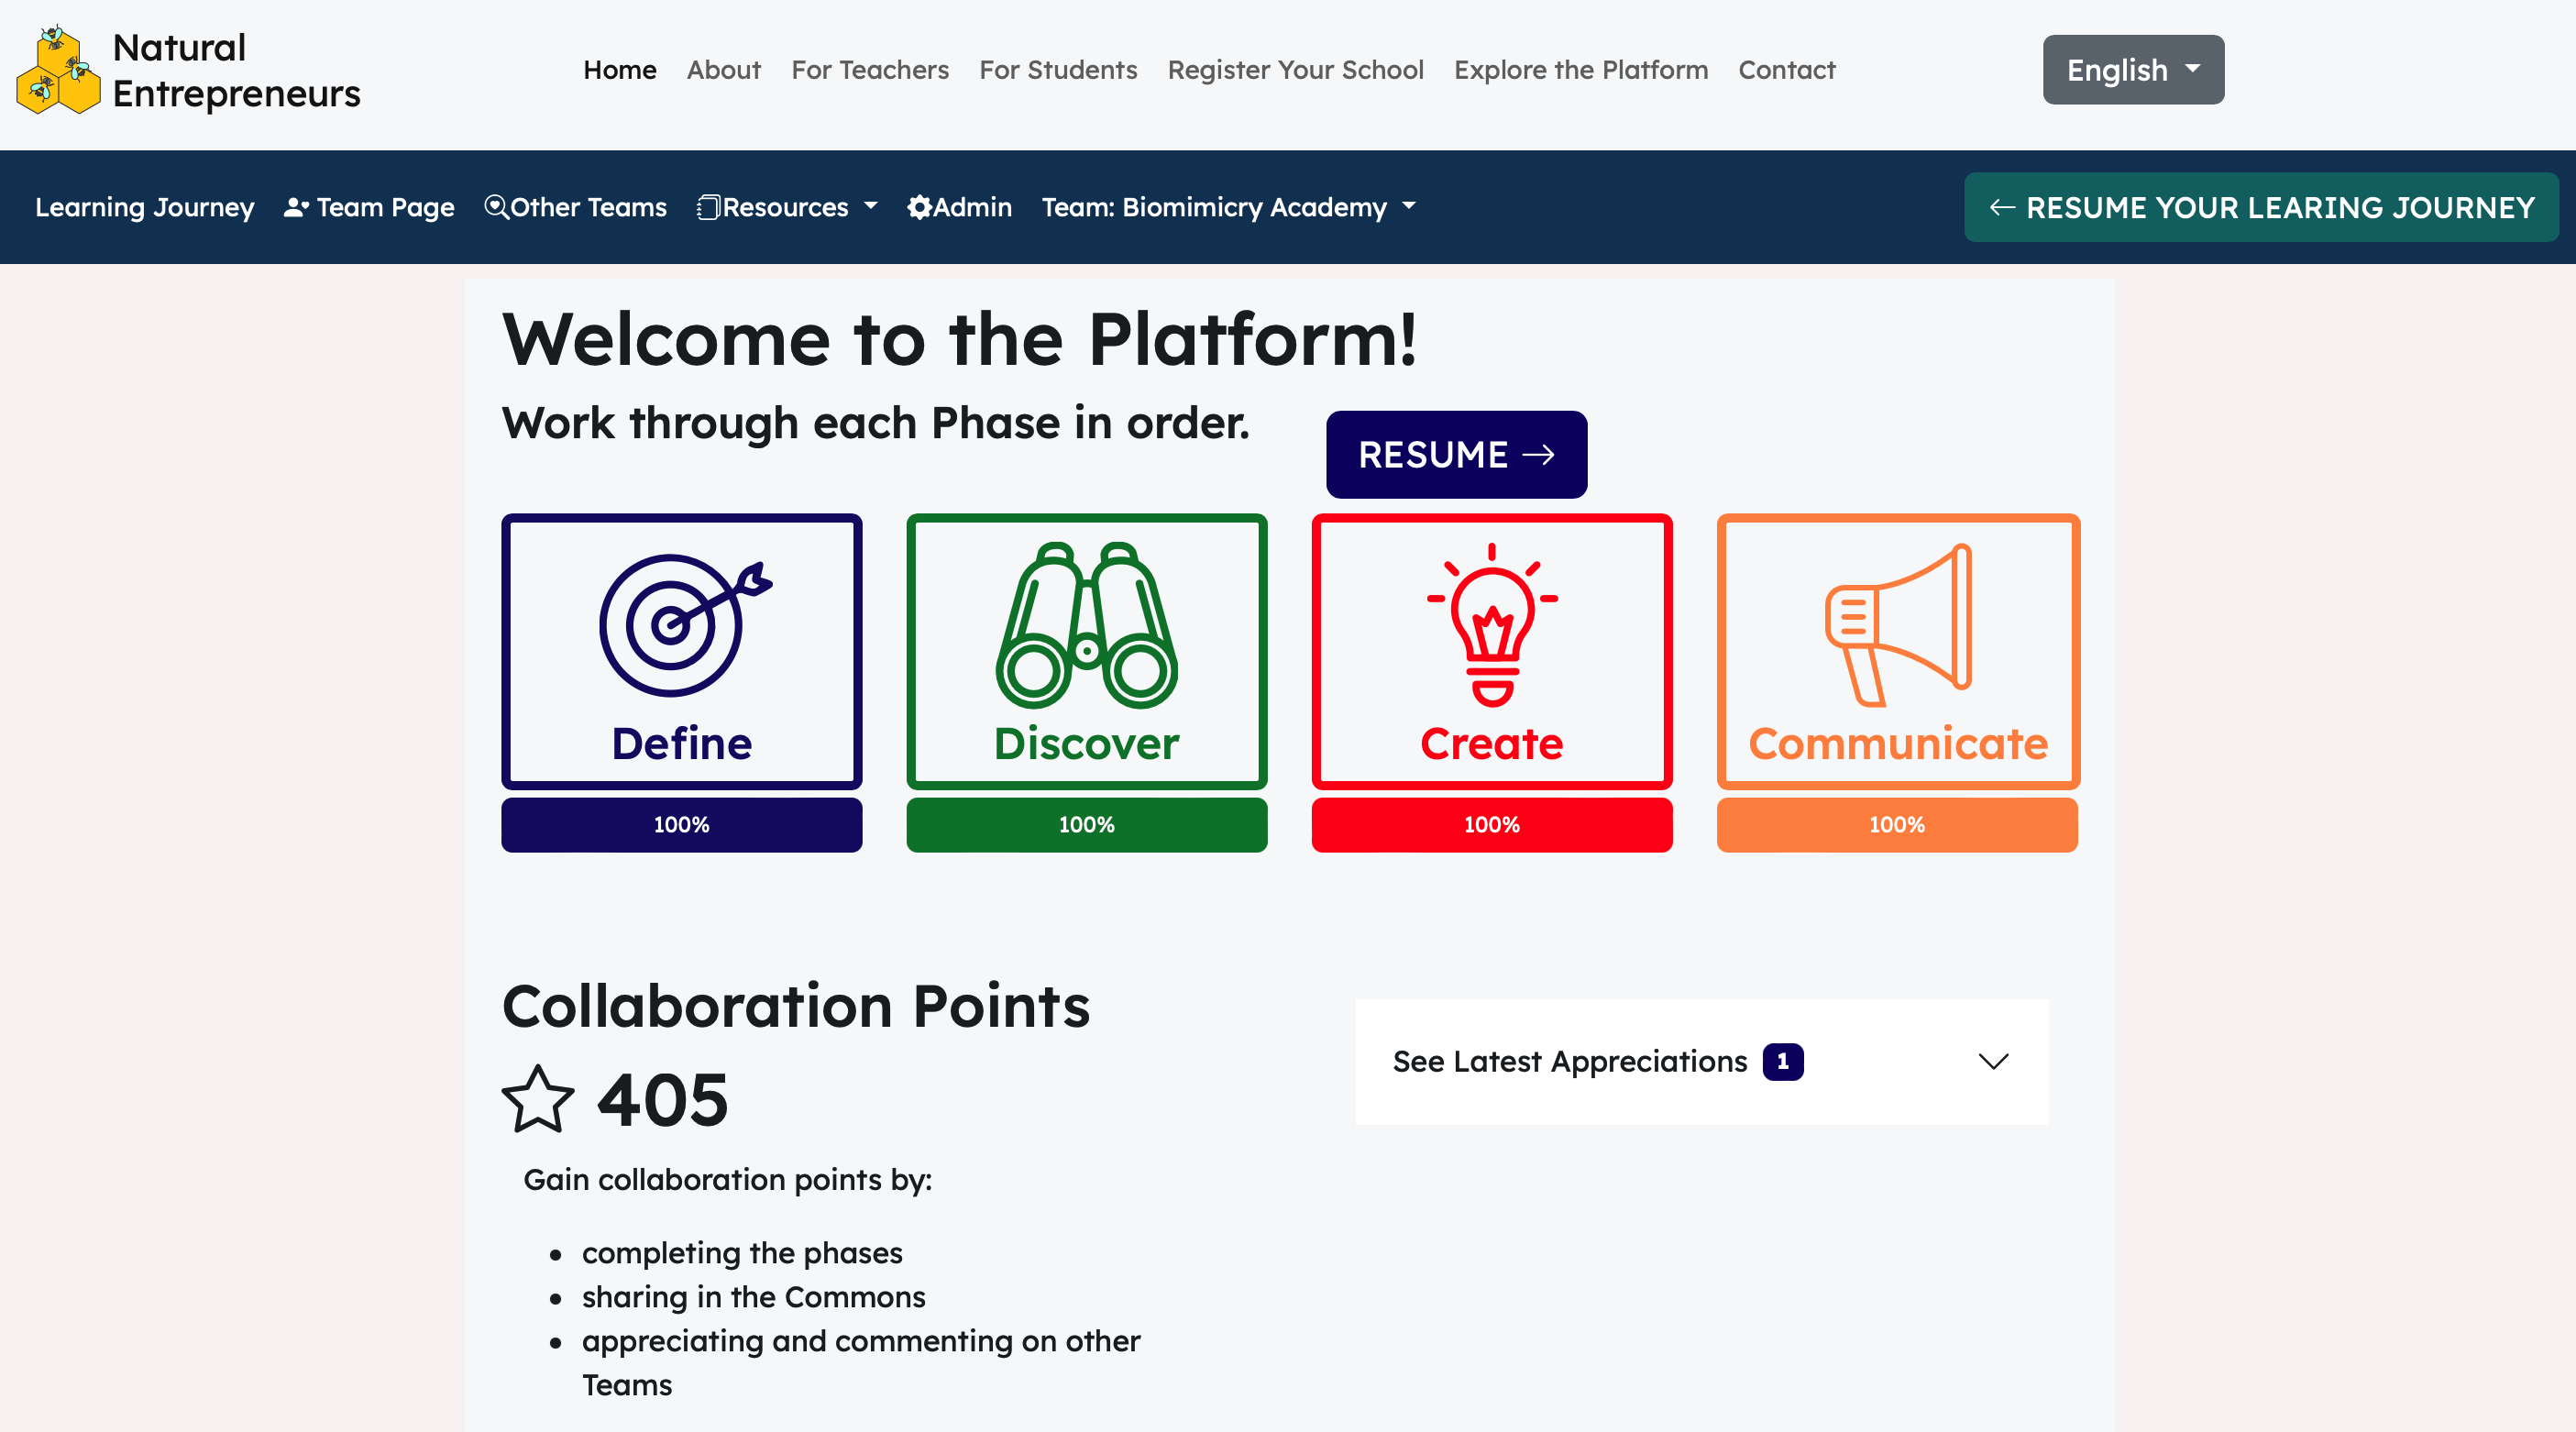 Screenshot of the Natural Entrepreneurs platform home page